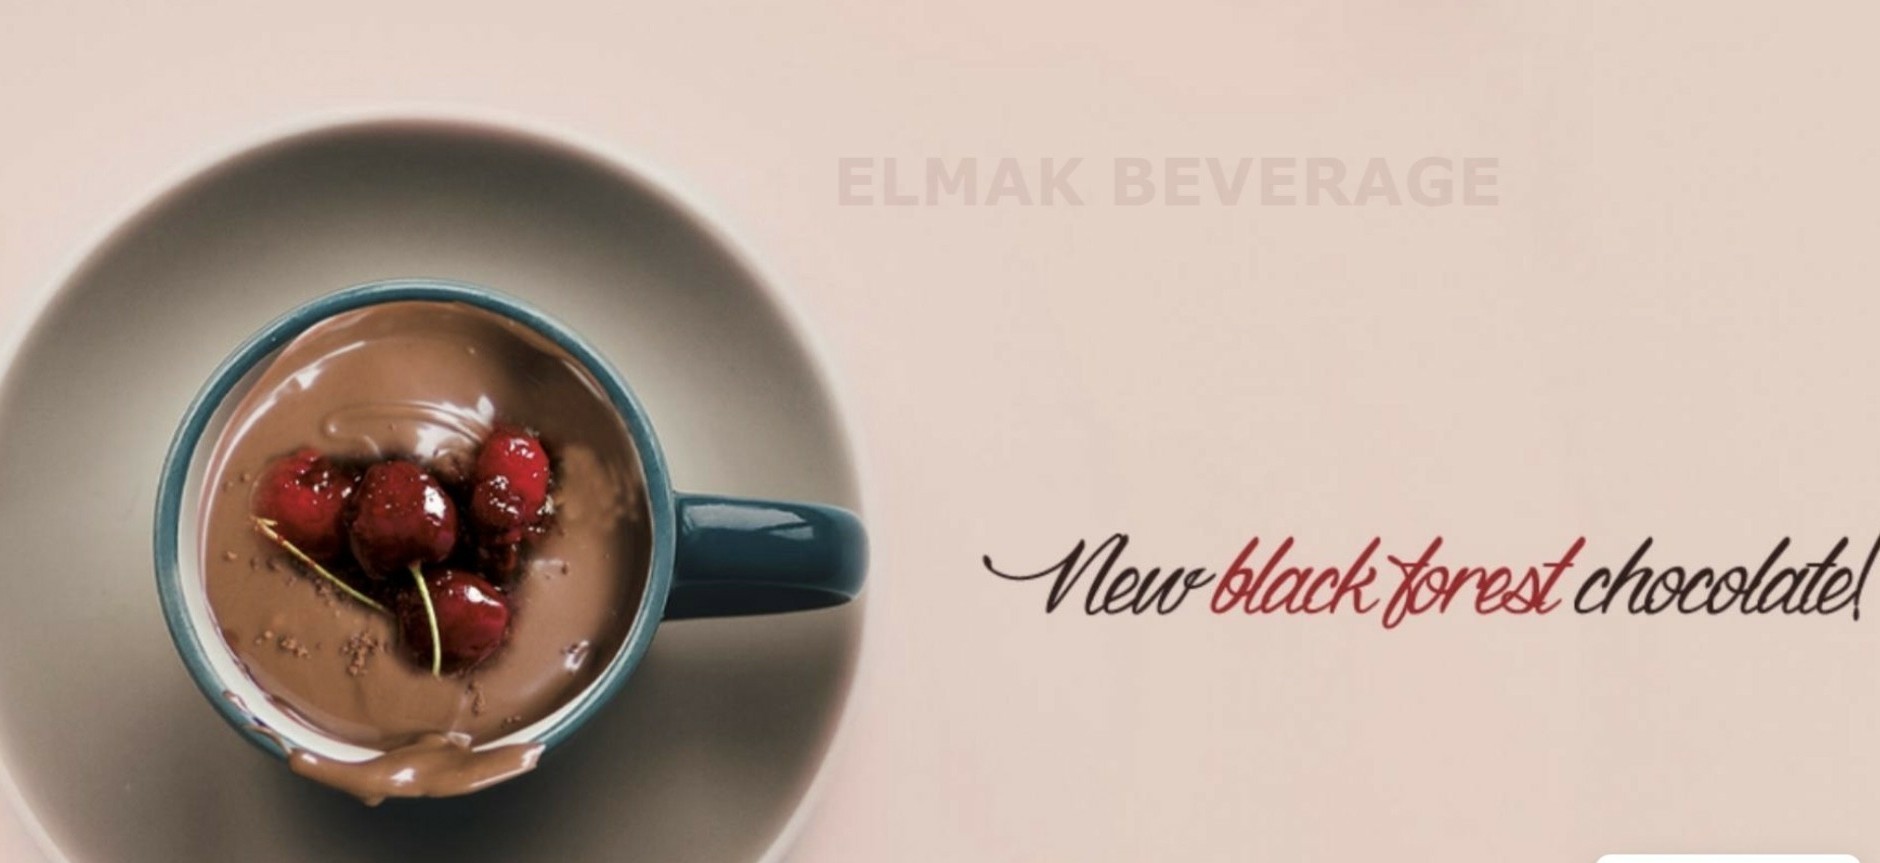 H ELMAK BEVERAGE κατακτά παγκόσμια διάκριση με τη Novello Chocolate